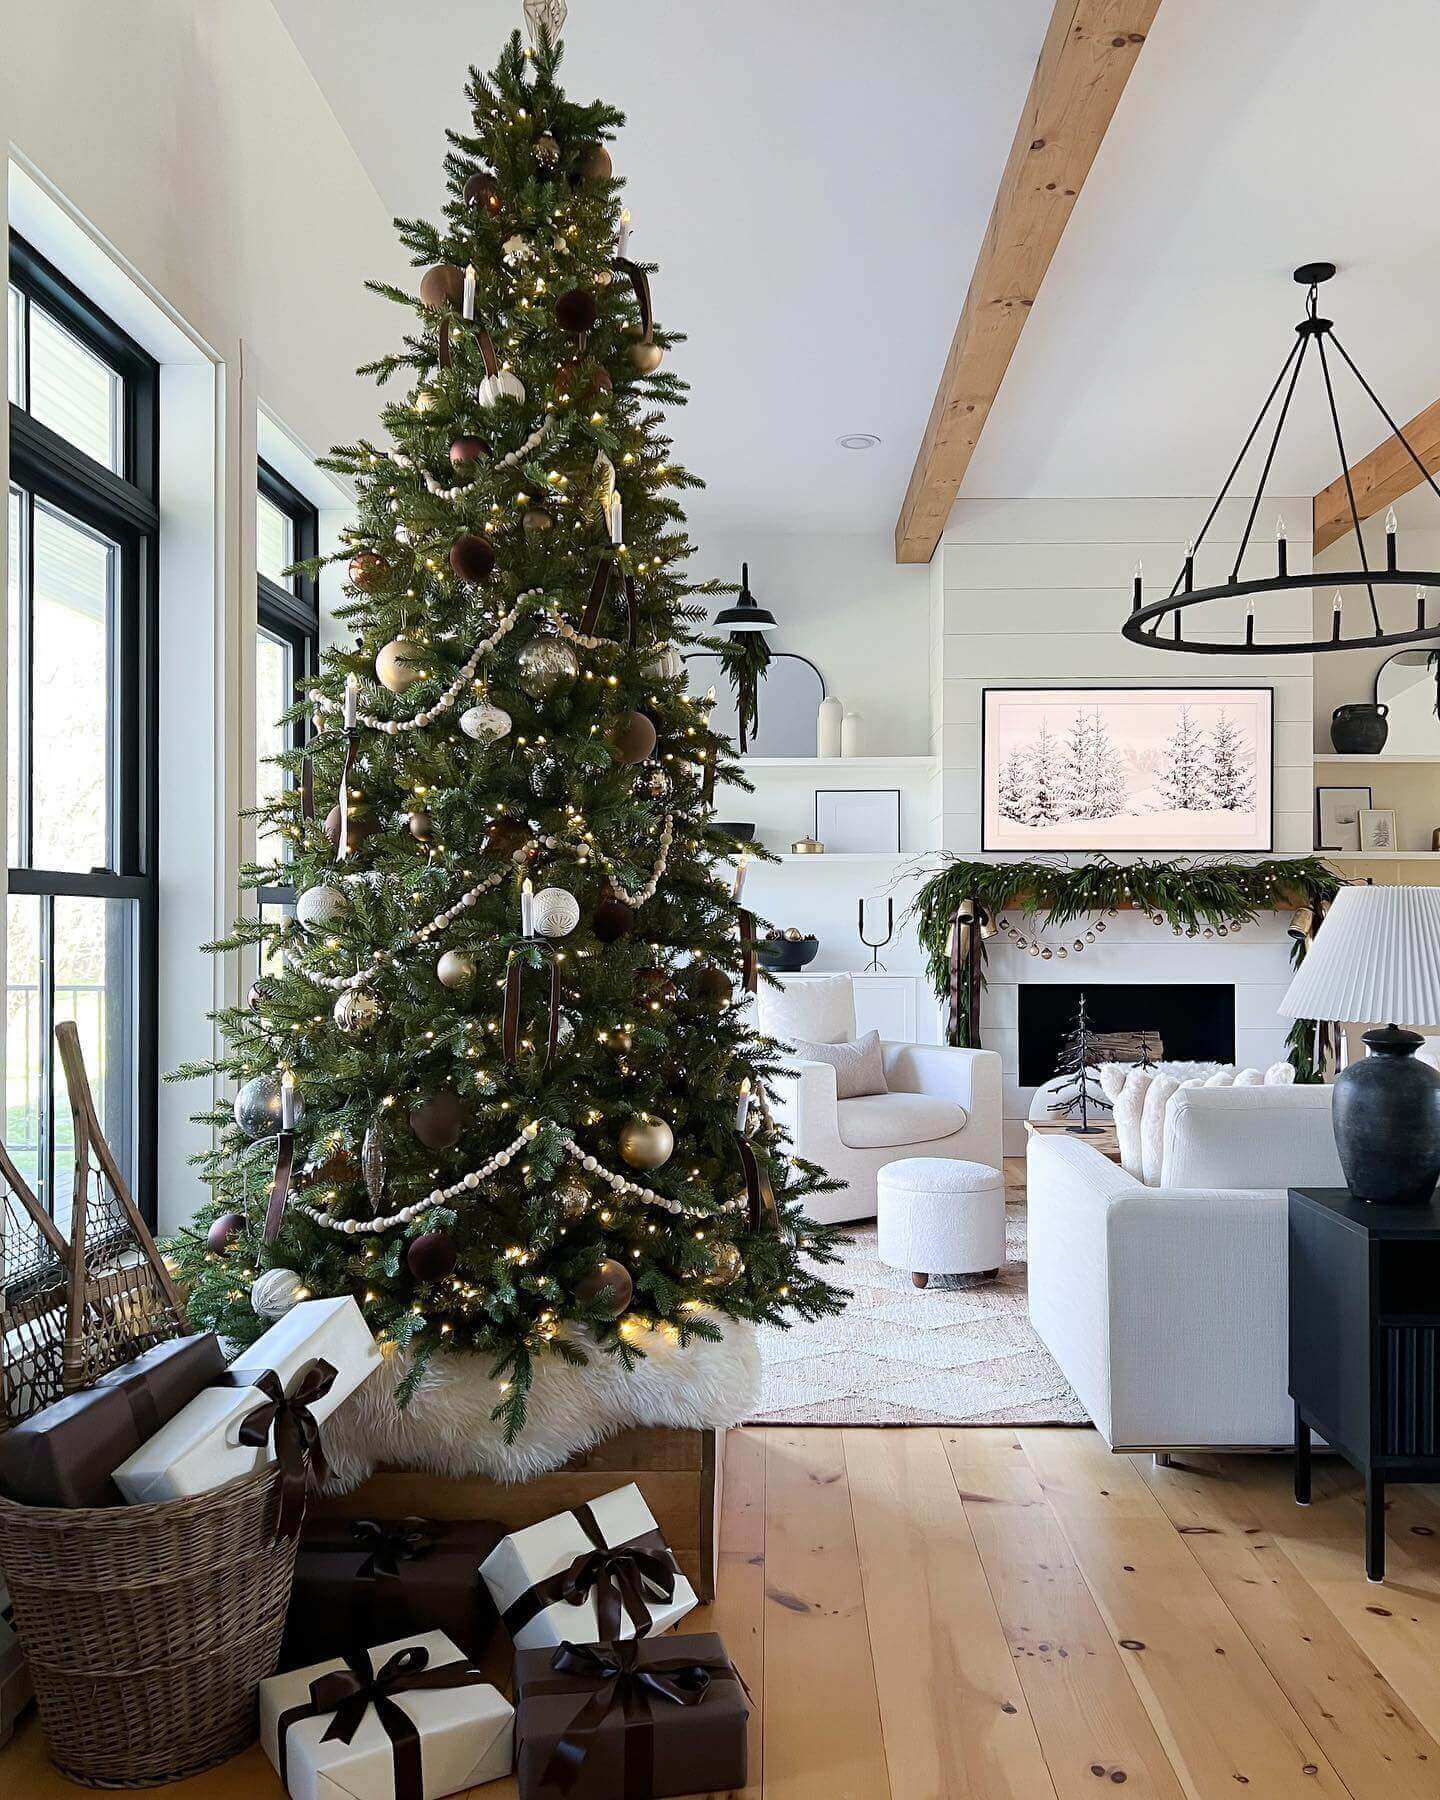 King of Christmas 9' Alpine Fir Slim Artificial Christmas Tree 900 Warm White Led Lights